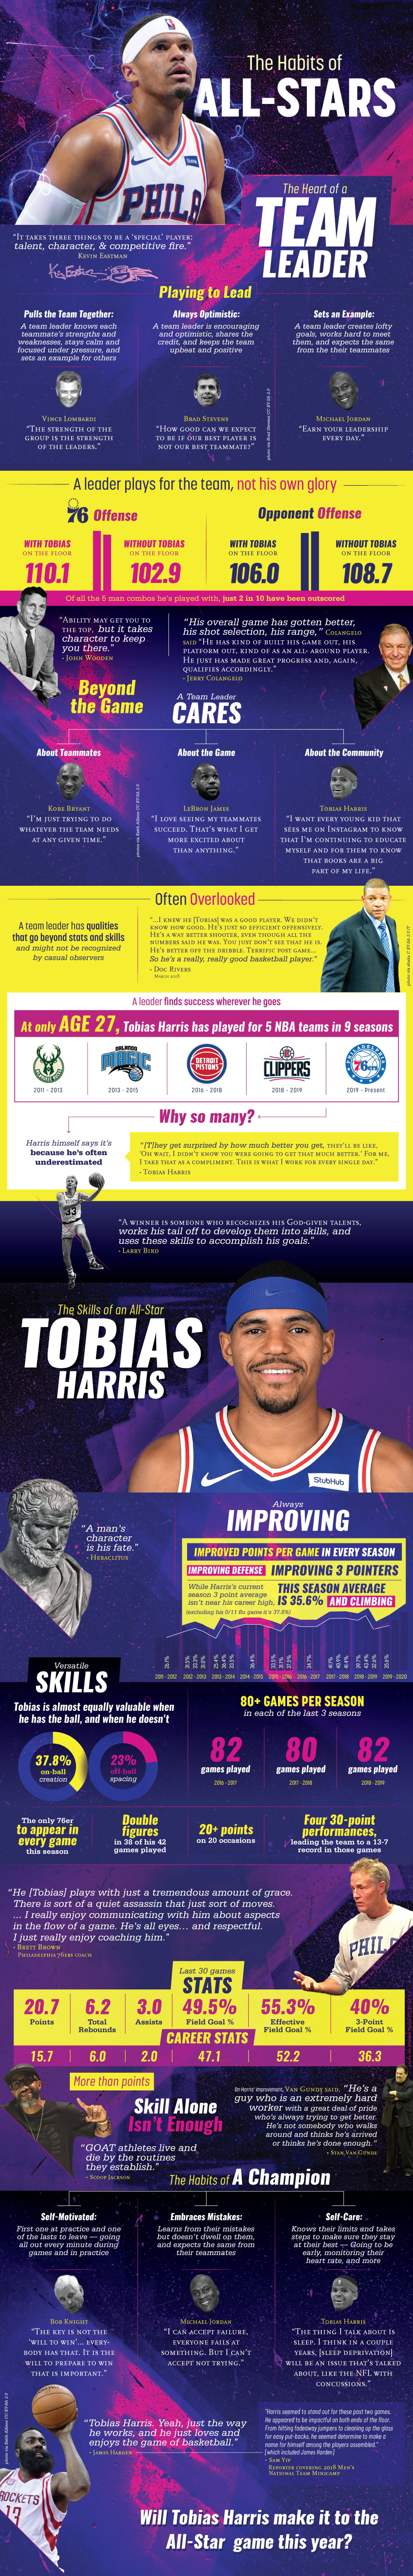 Tobias Harris - The Heart of a Team Leader